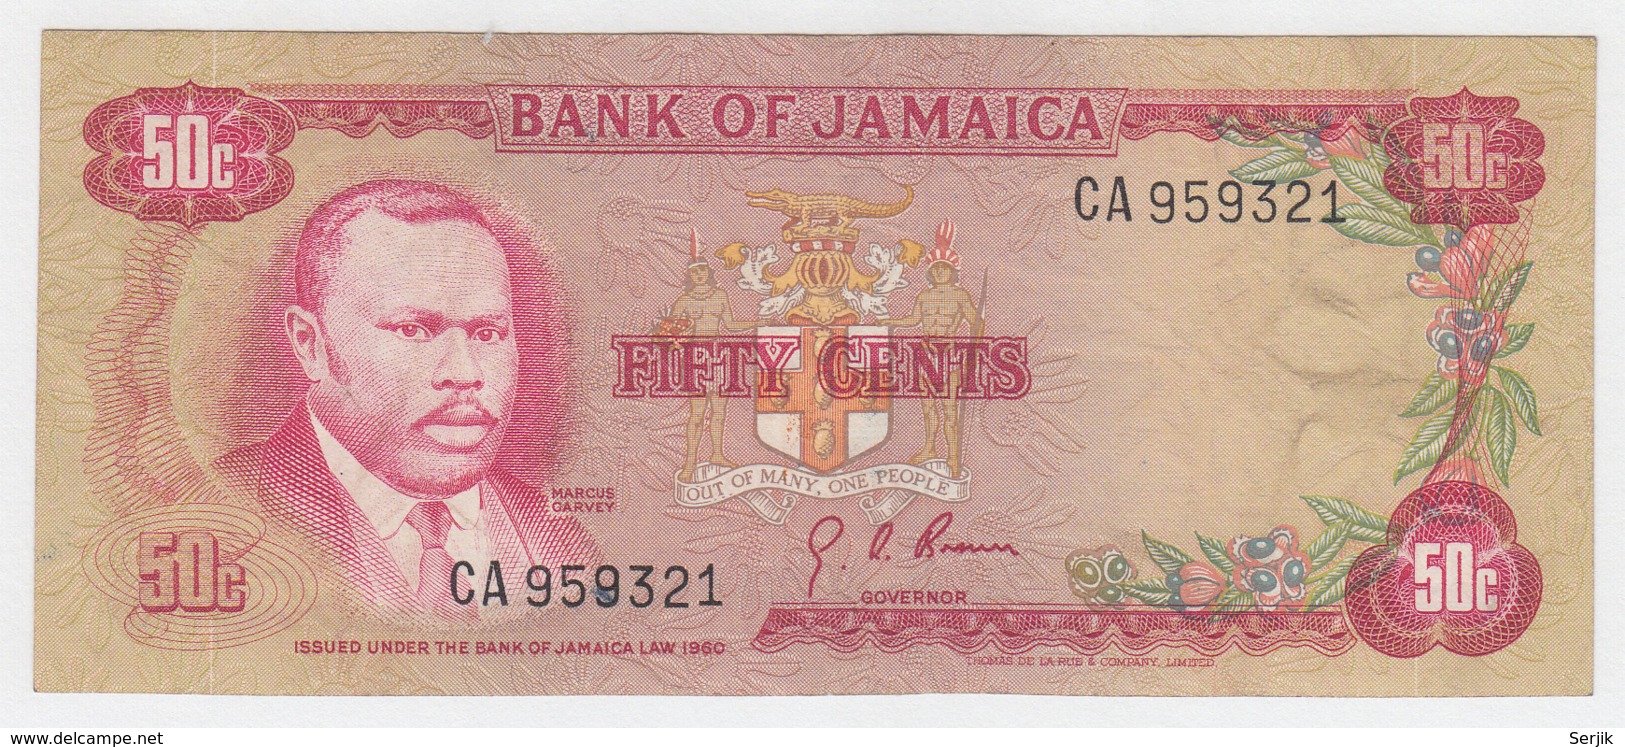 JAMAICA 50 Cents 1960 VF+ Pick 53 - Jamaica